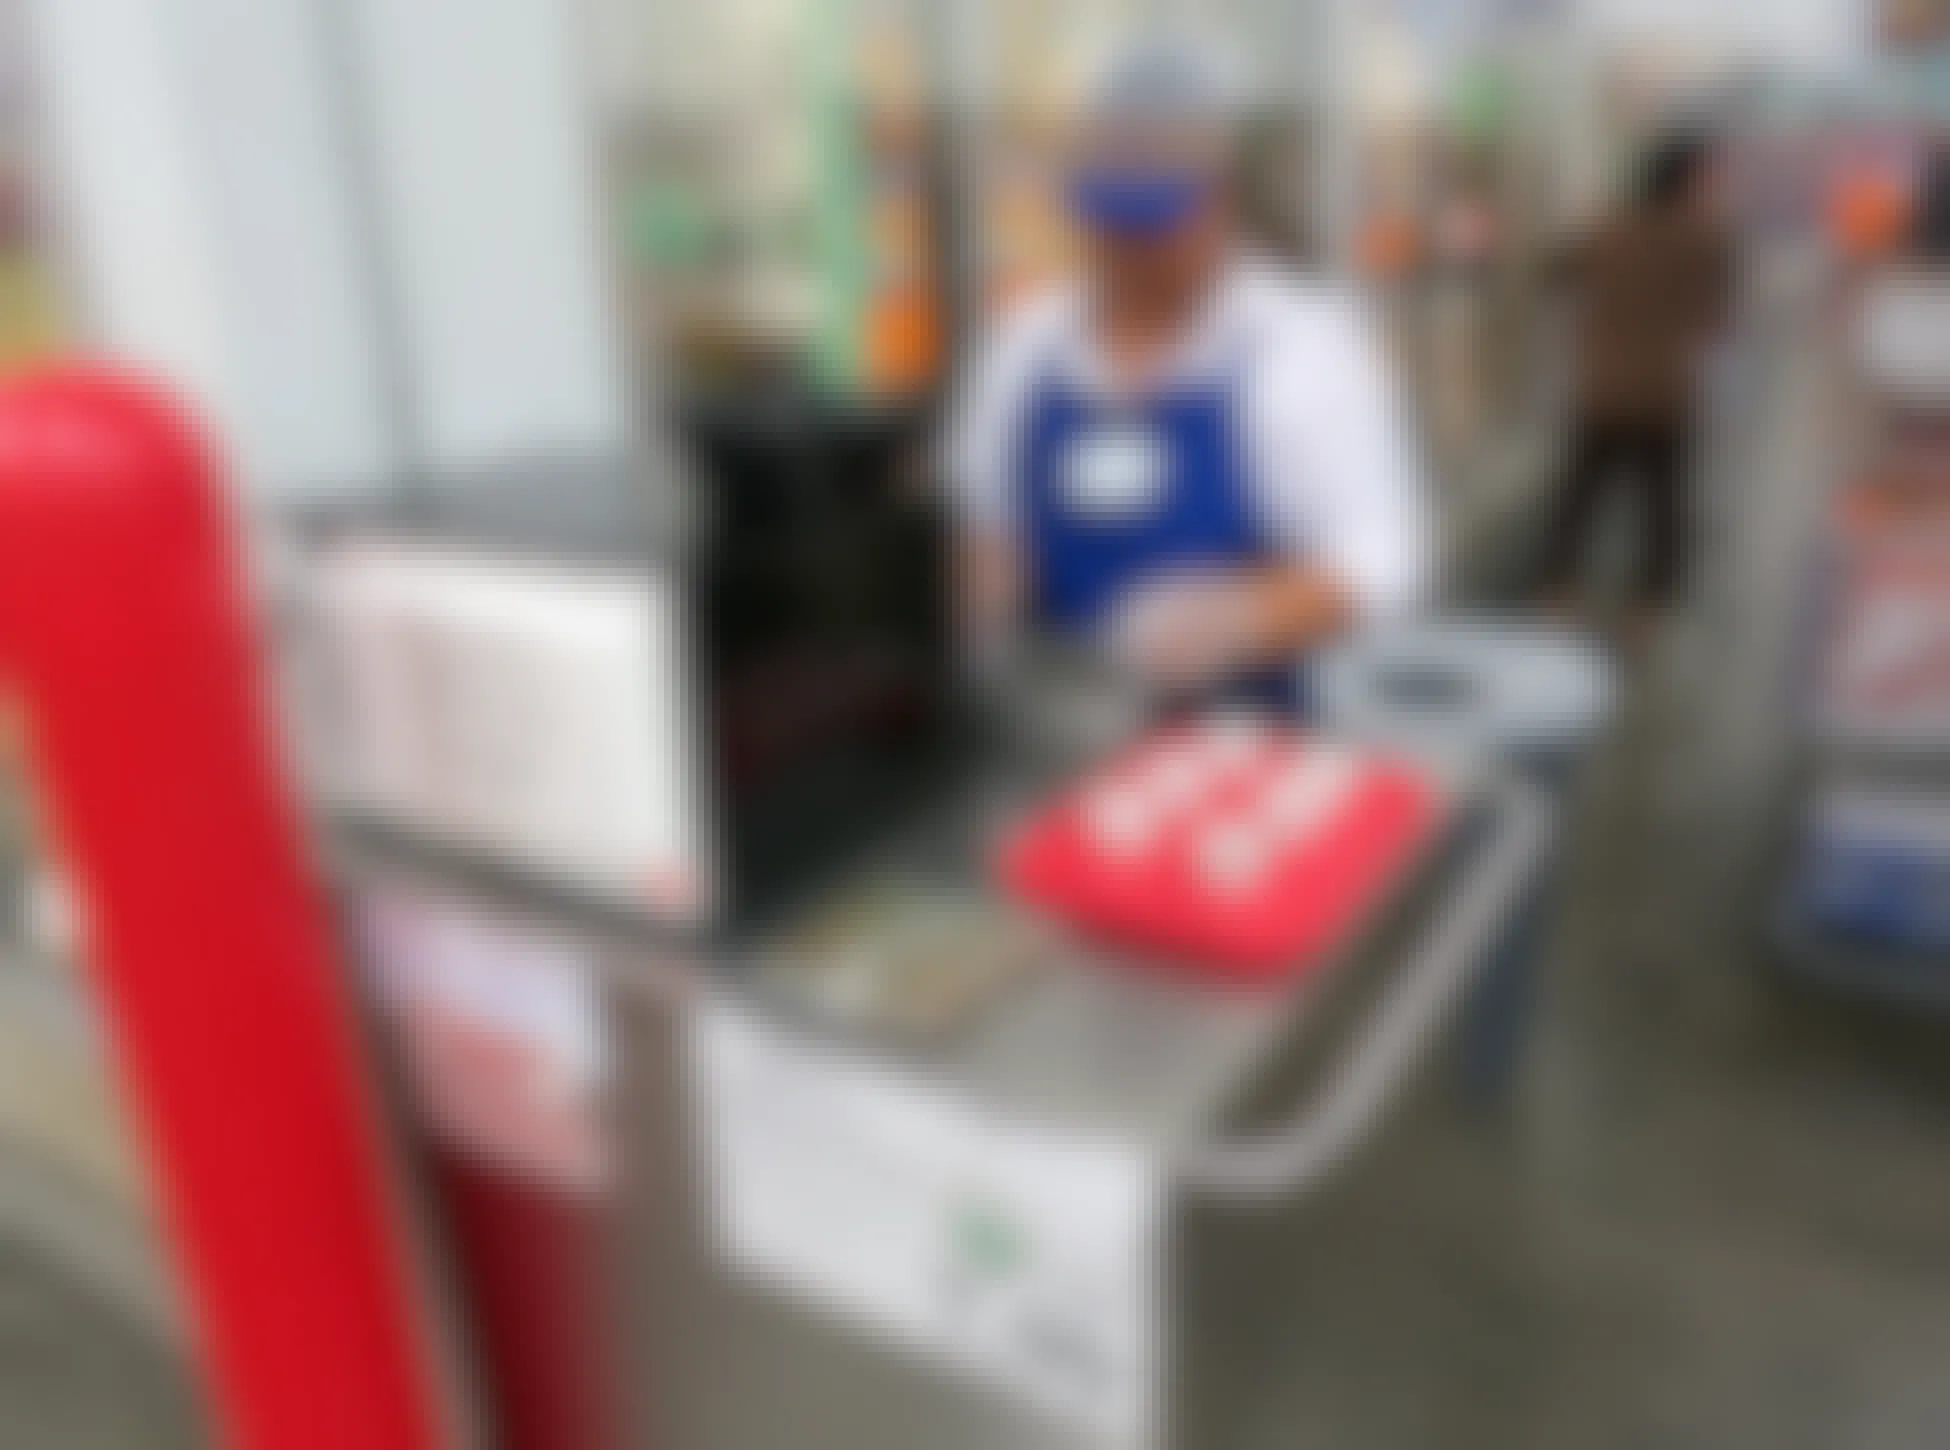 Costco free samples vendor preparing samples in the frozen food aisle